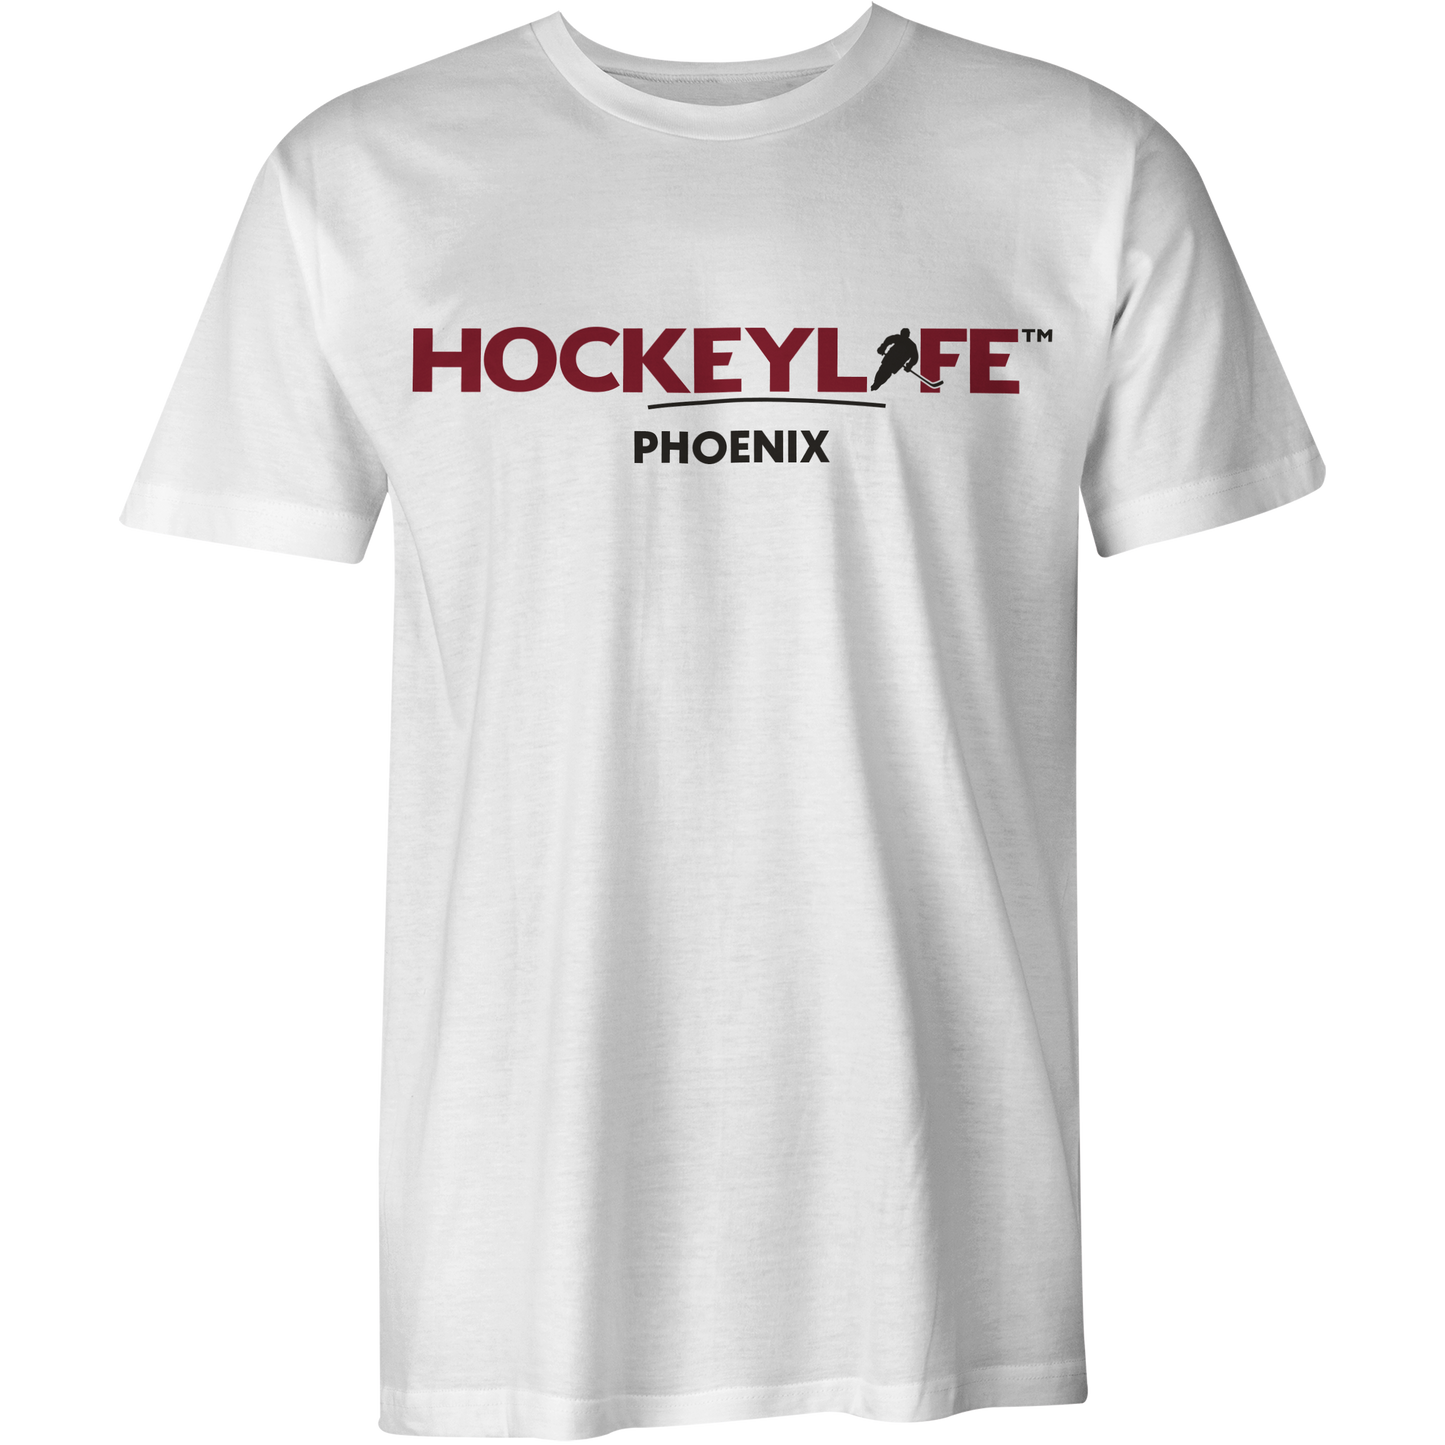 HockeyLife Phoenix Tee Shirt